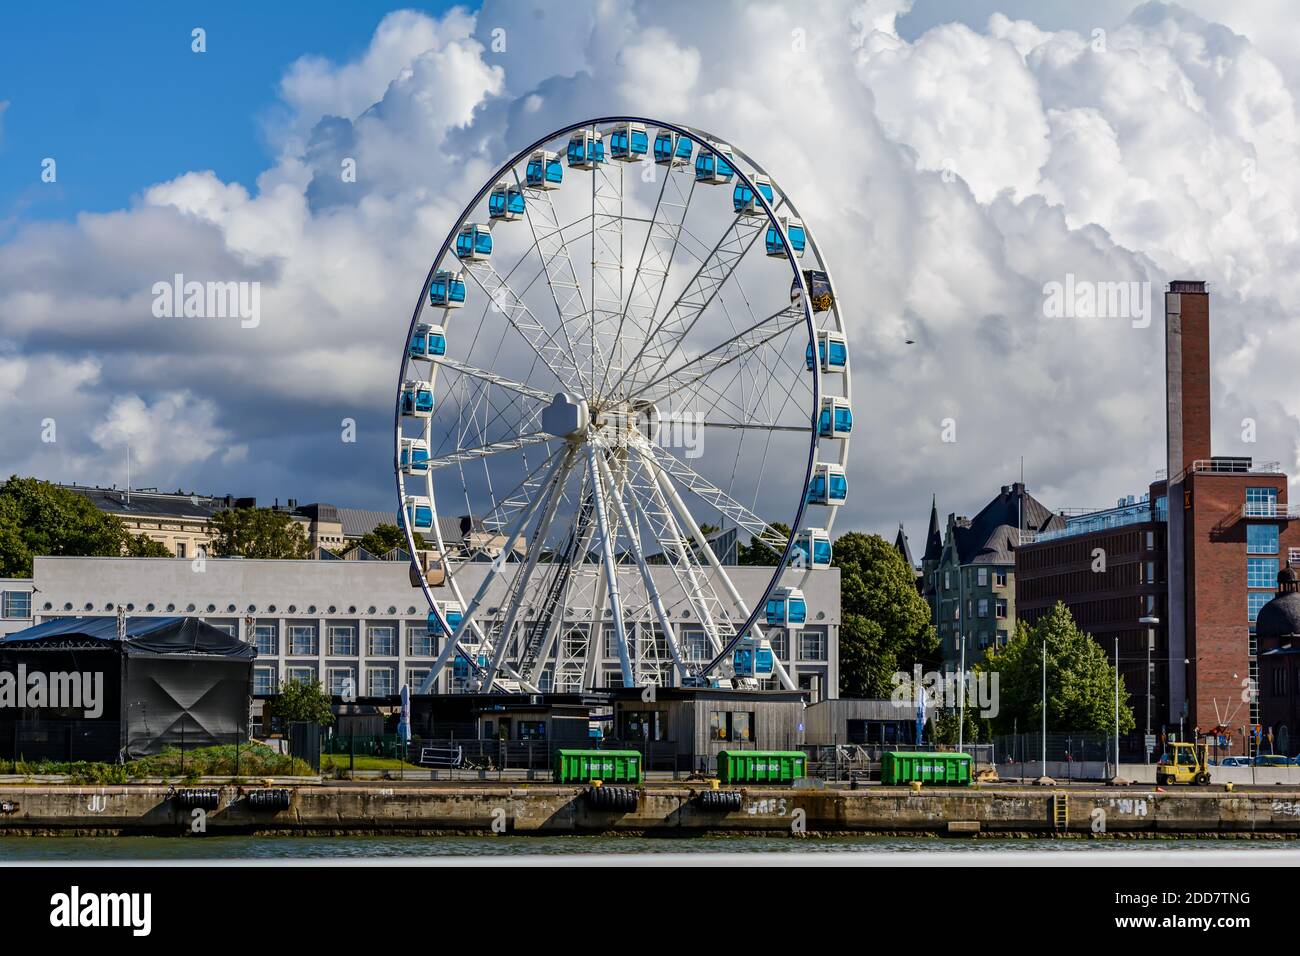 Tall Ferris wheel called Helsinki SkyWheel rising above the harbour Stock Photo